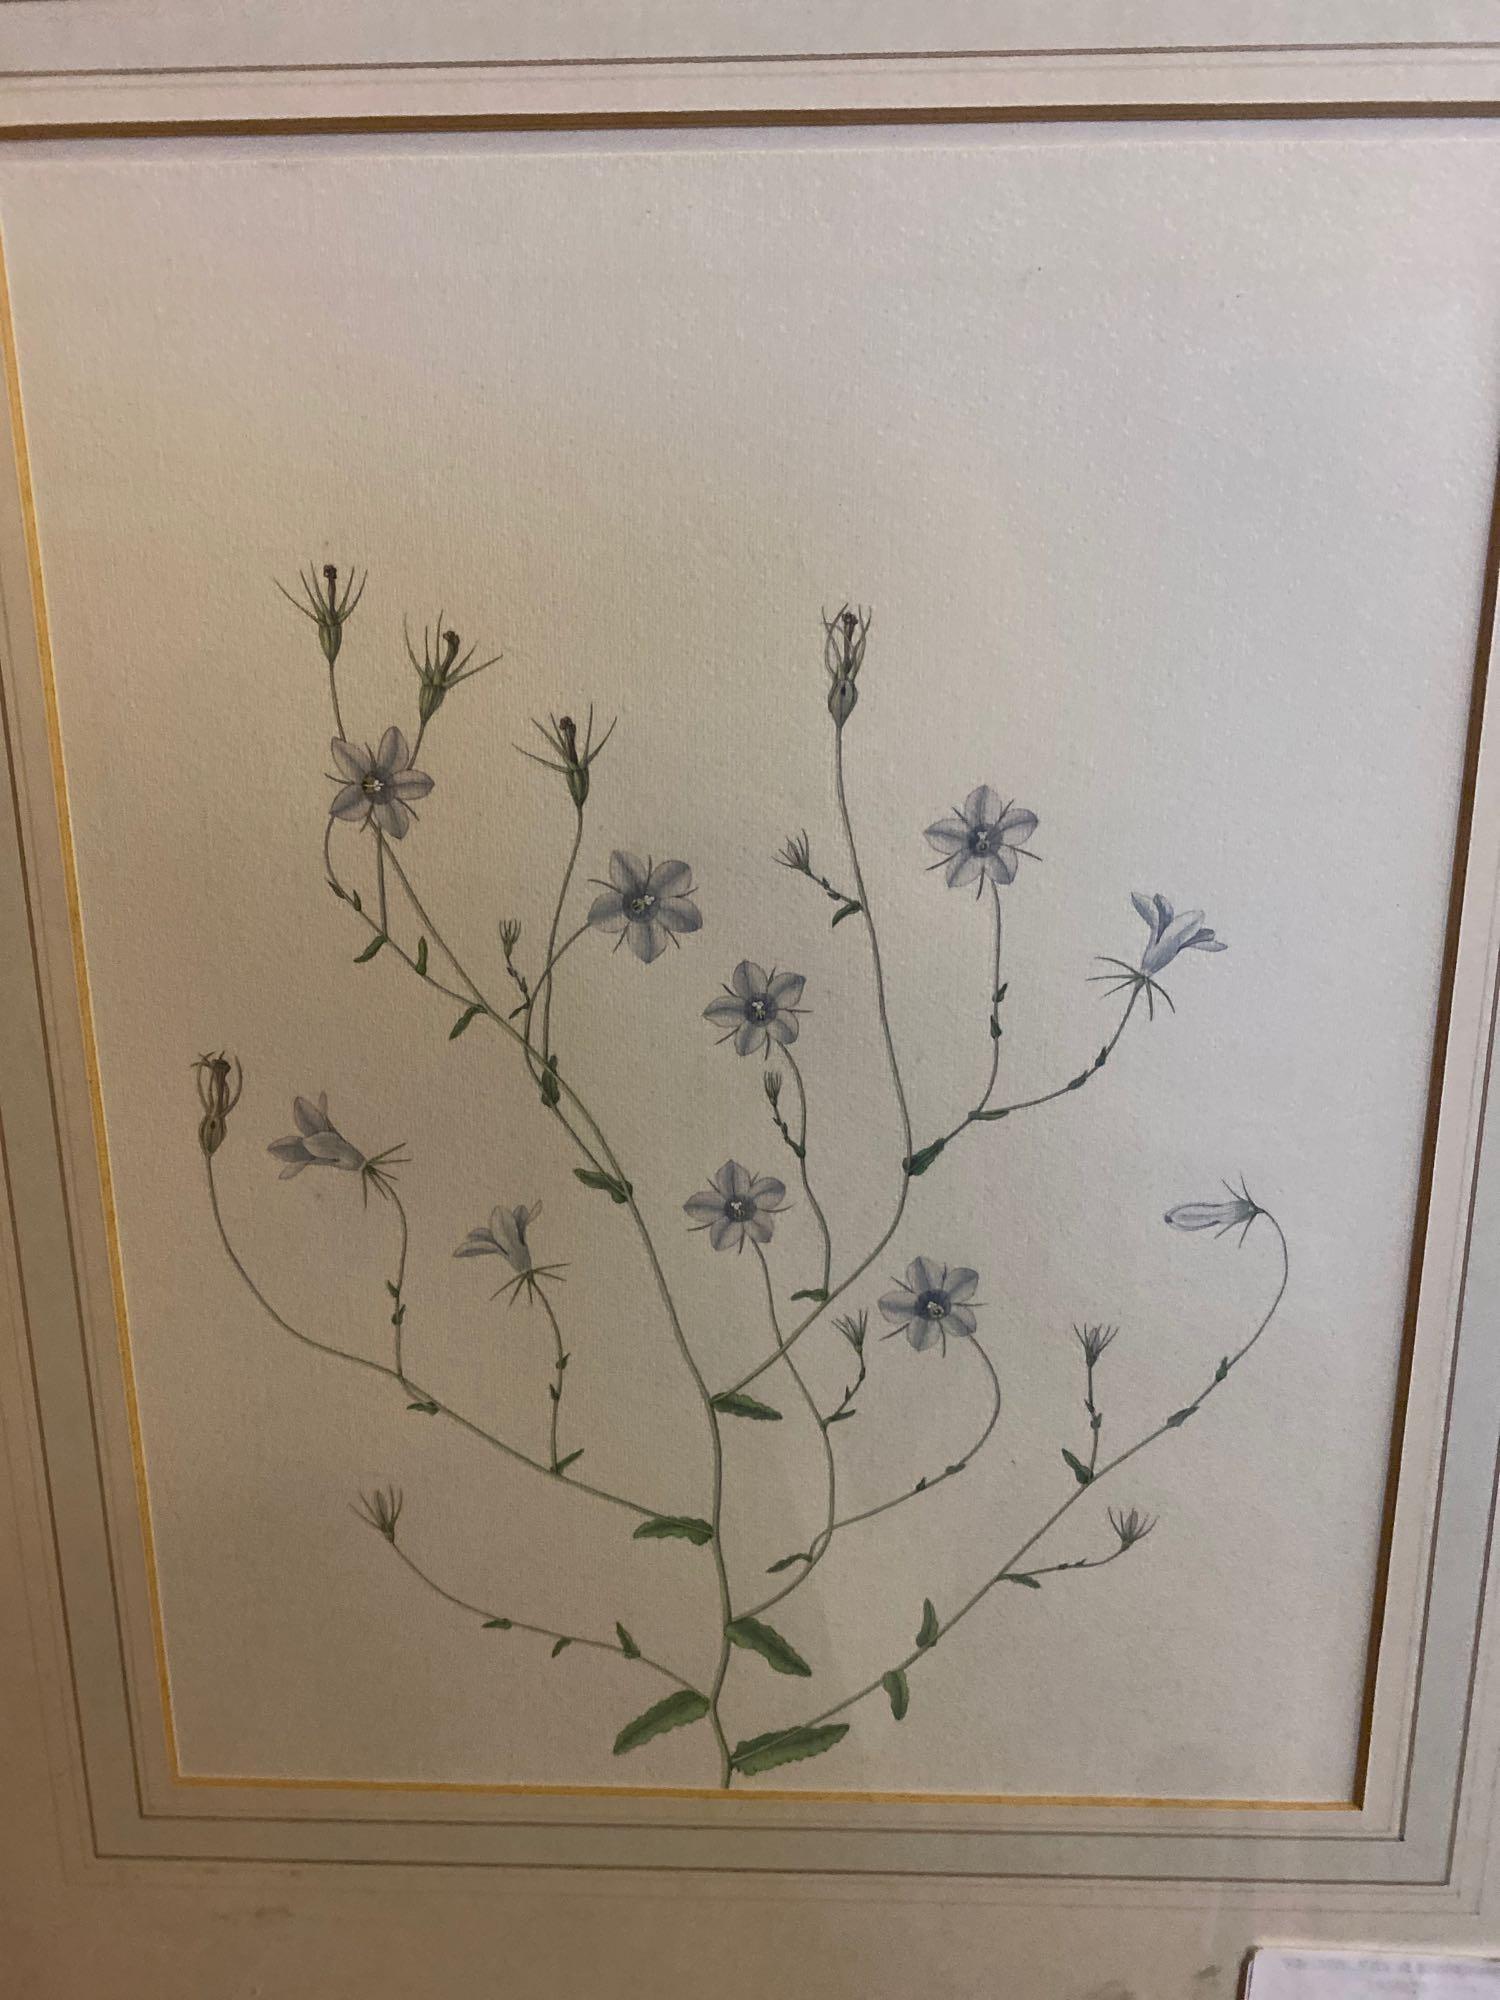 Framed and glazed botanical watercolour signed C.W., 1967 - Image 2 of 2